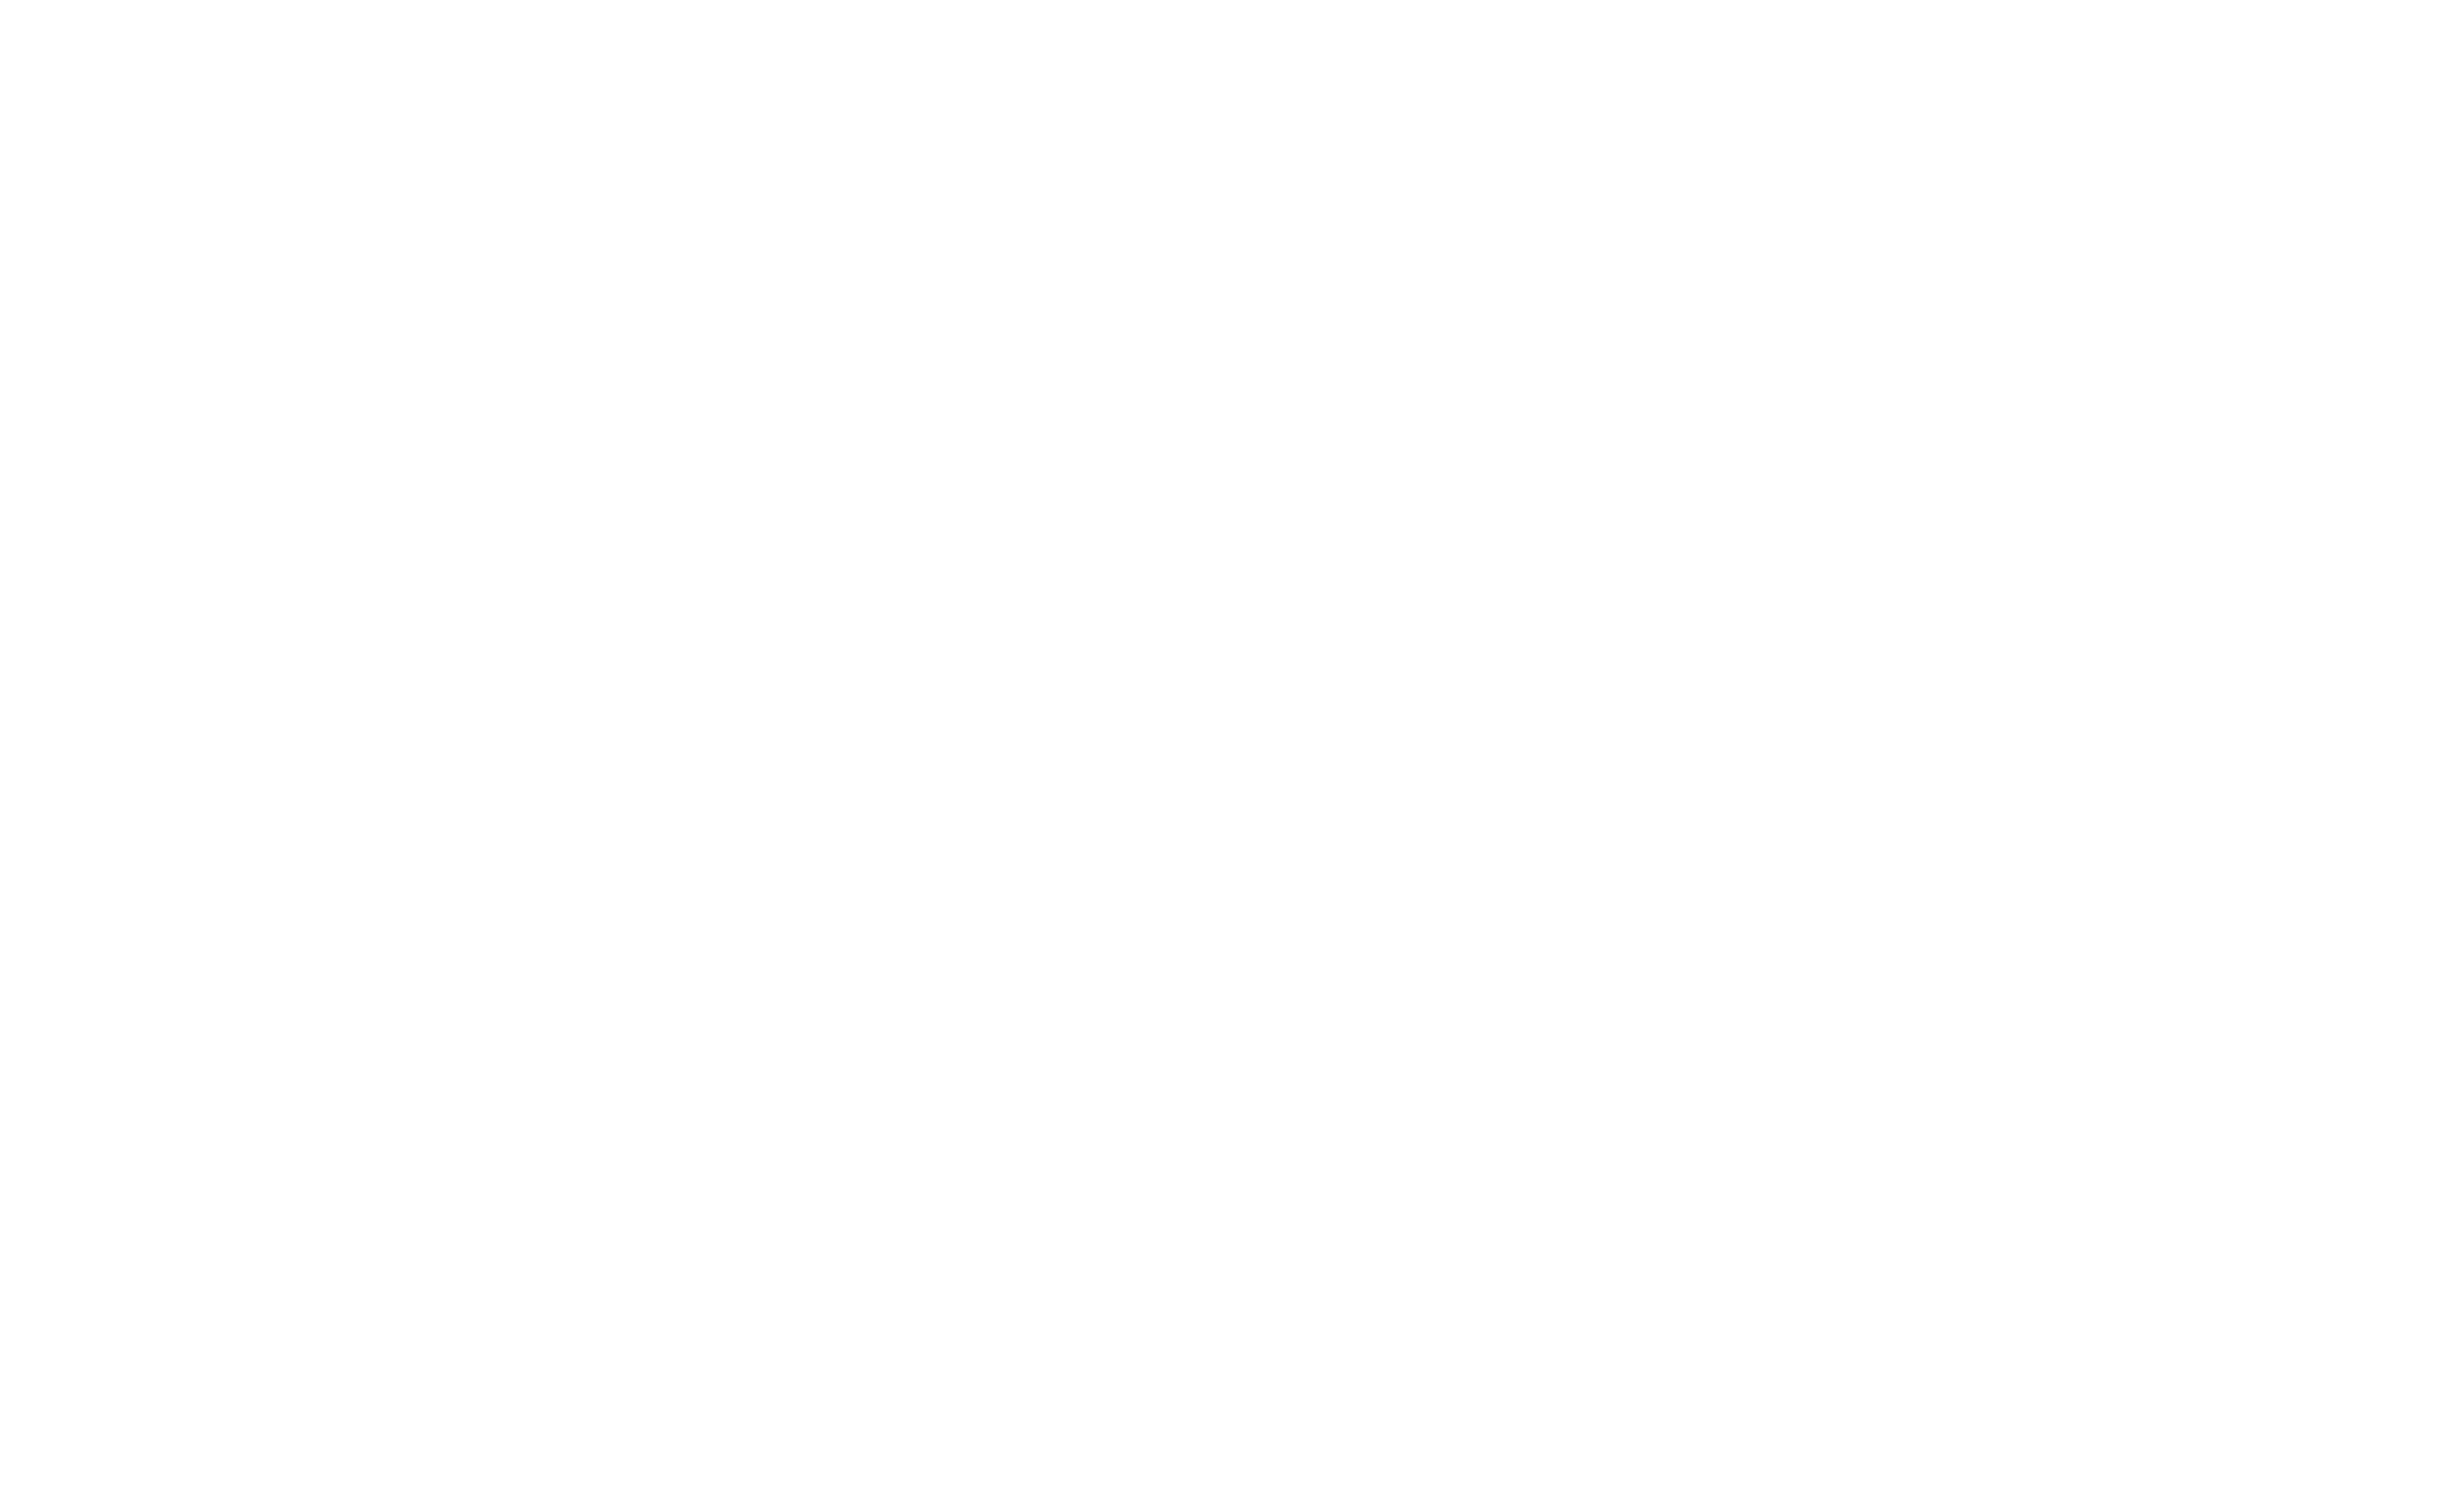 All Digital Distributors